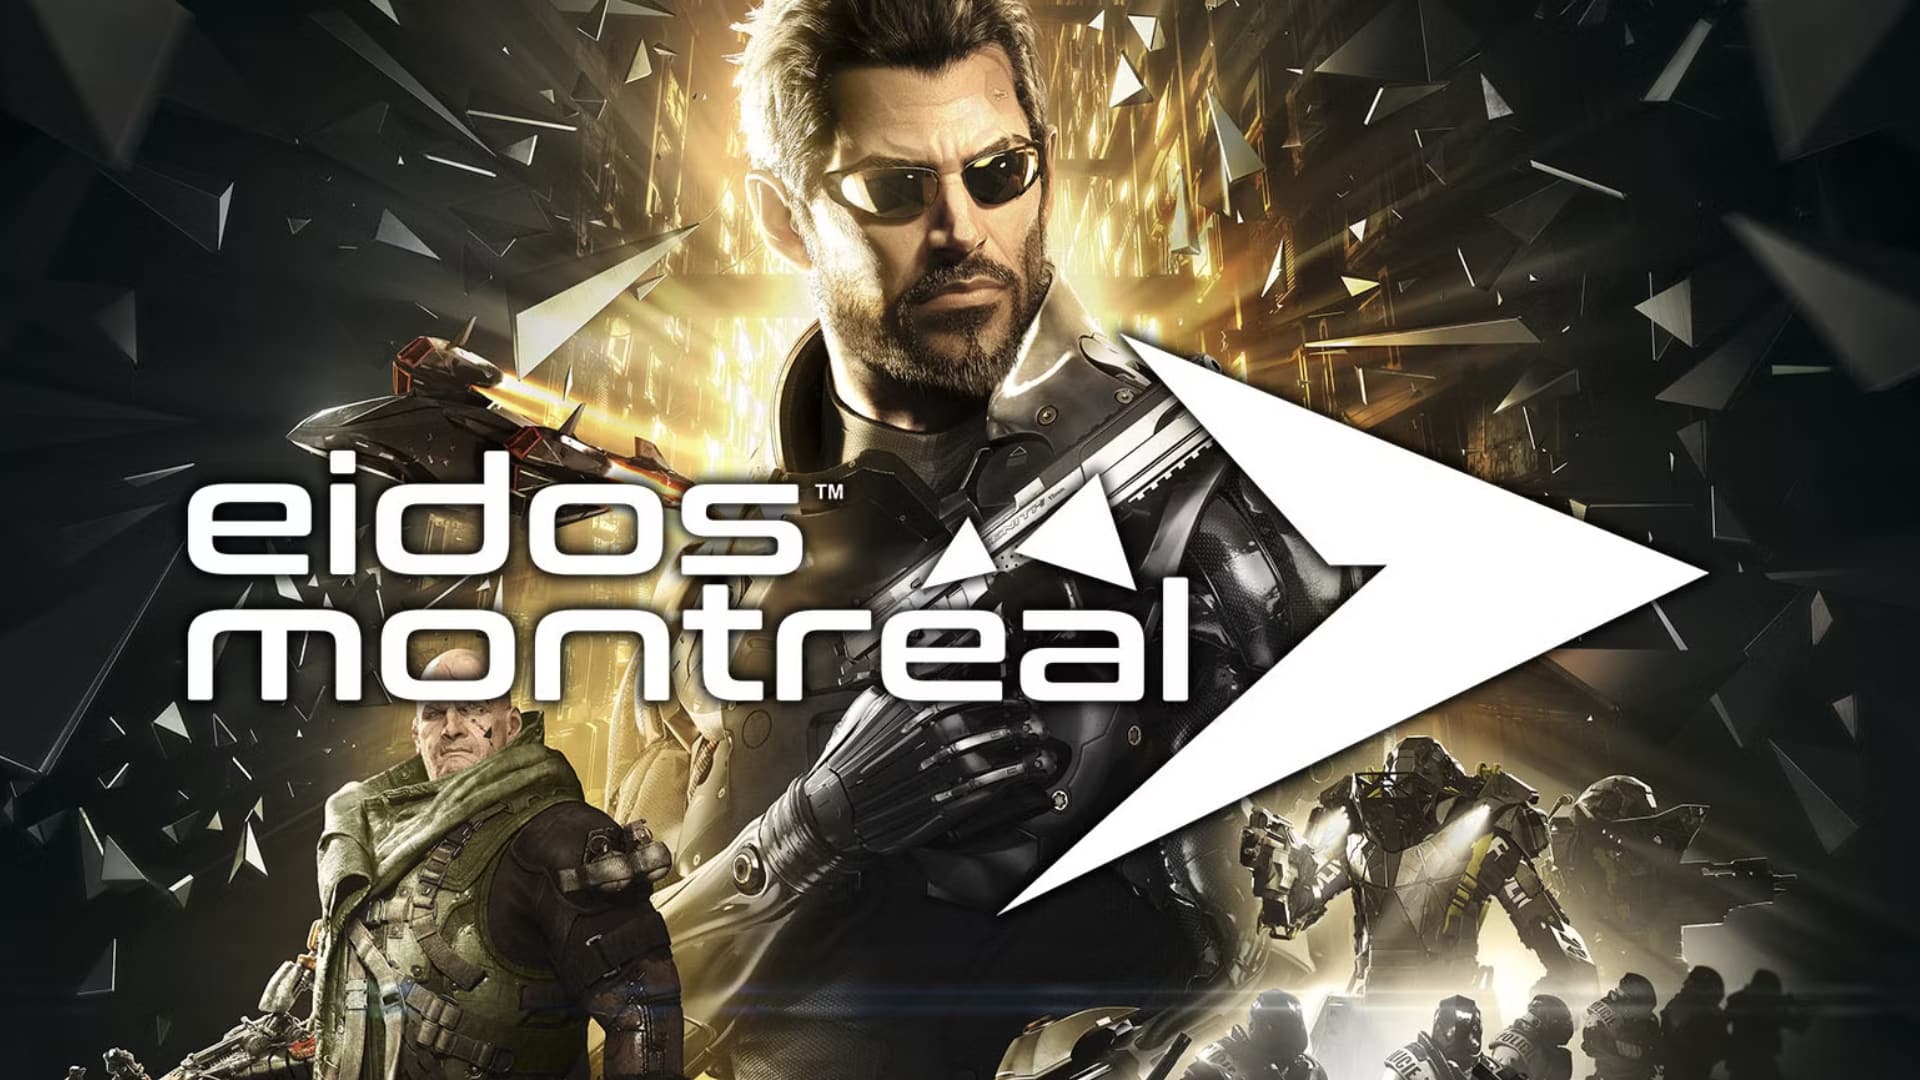 New Deus Ex Game Cancelled